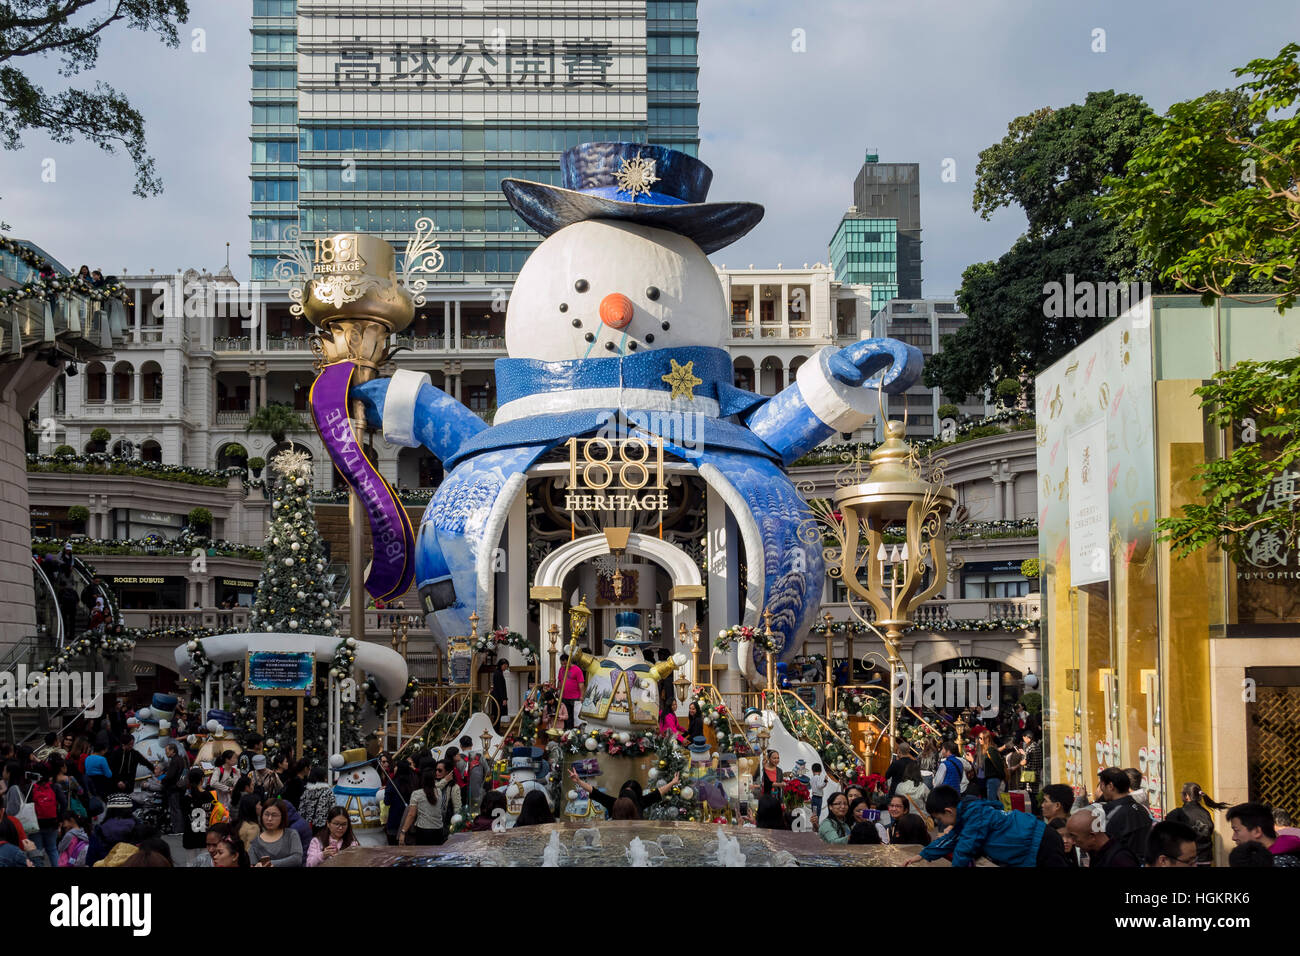 Hong Kong, JAN 1: Weihnachtsdekoration der 1881 Heritage Mall auf 1. Januar 2017 in Hongkong Stockfoto